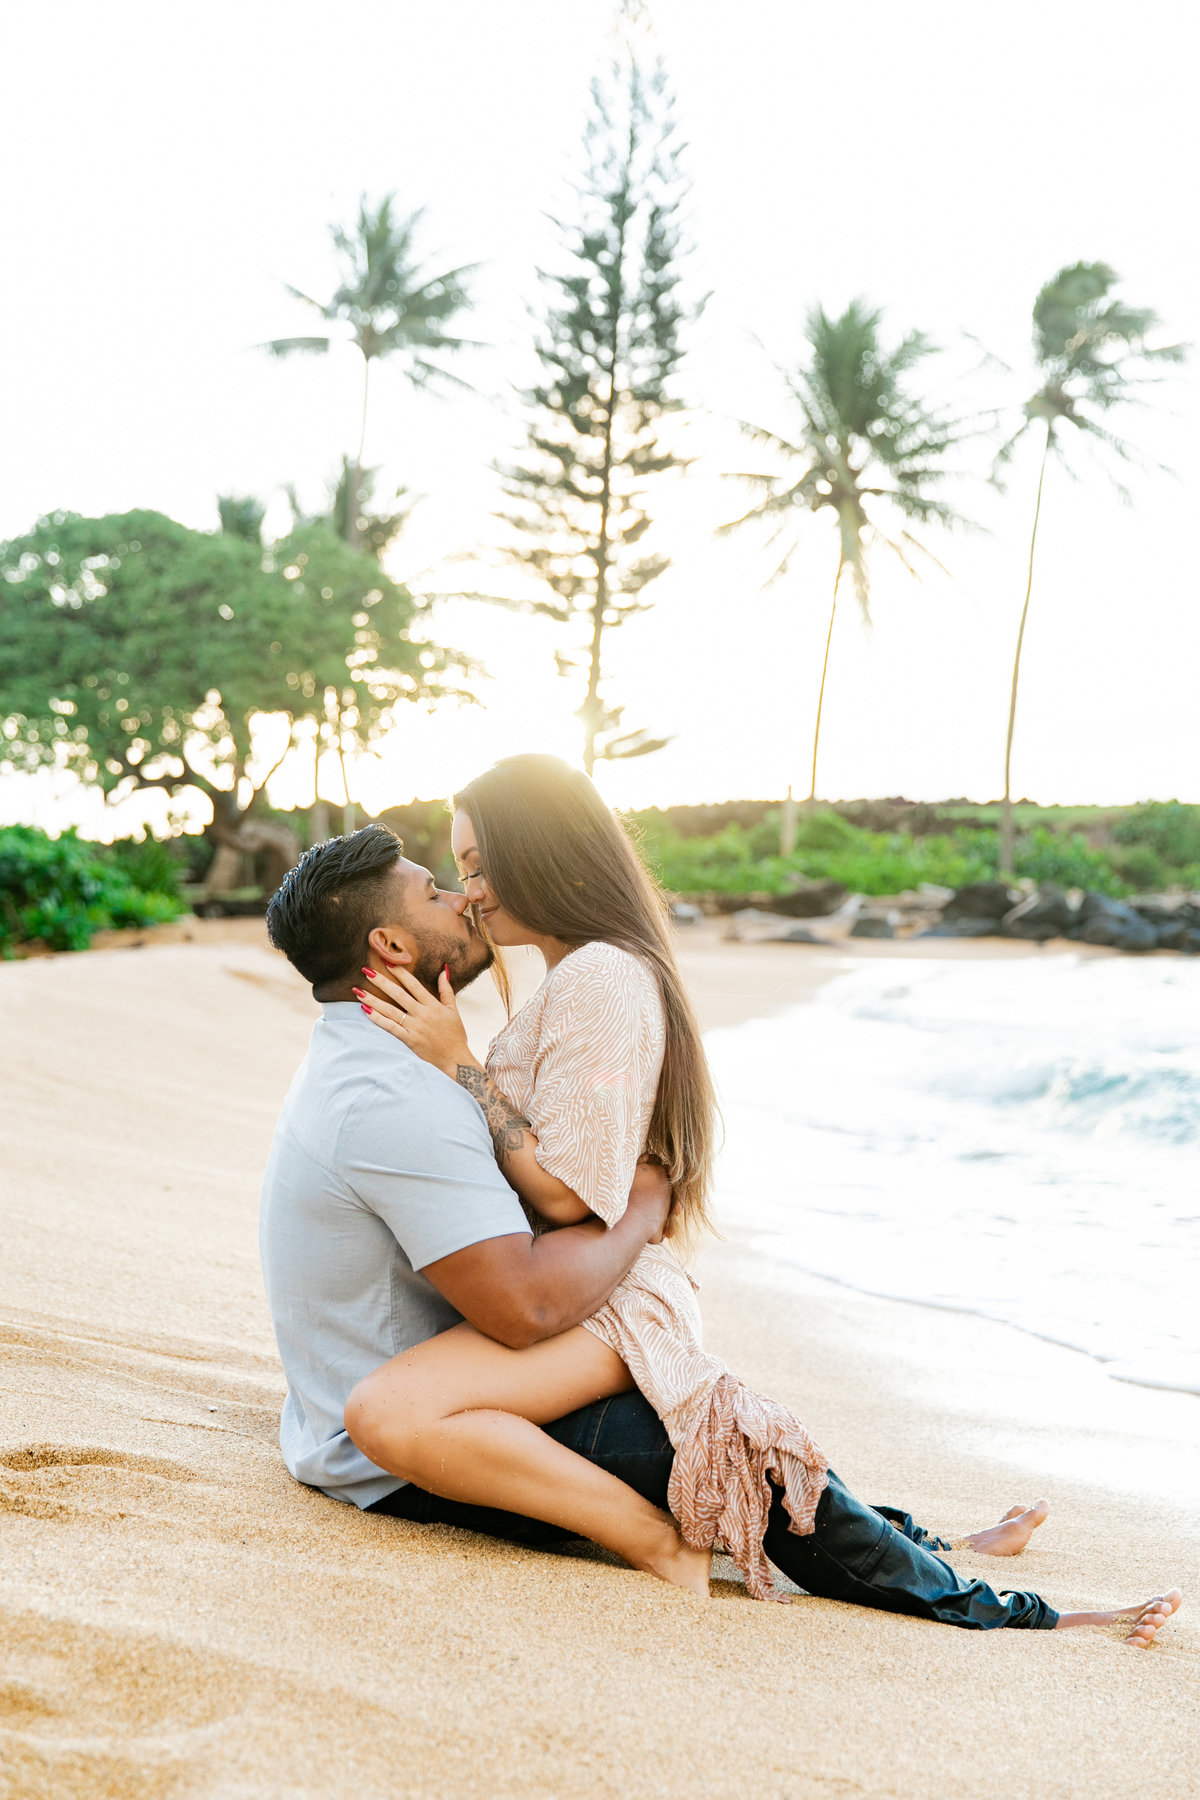 Karlie Colleen Photography - Kauai Hawaii Wedding Photography - Sydney & BJ -97